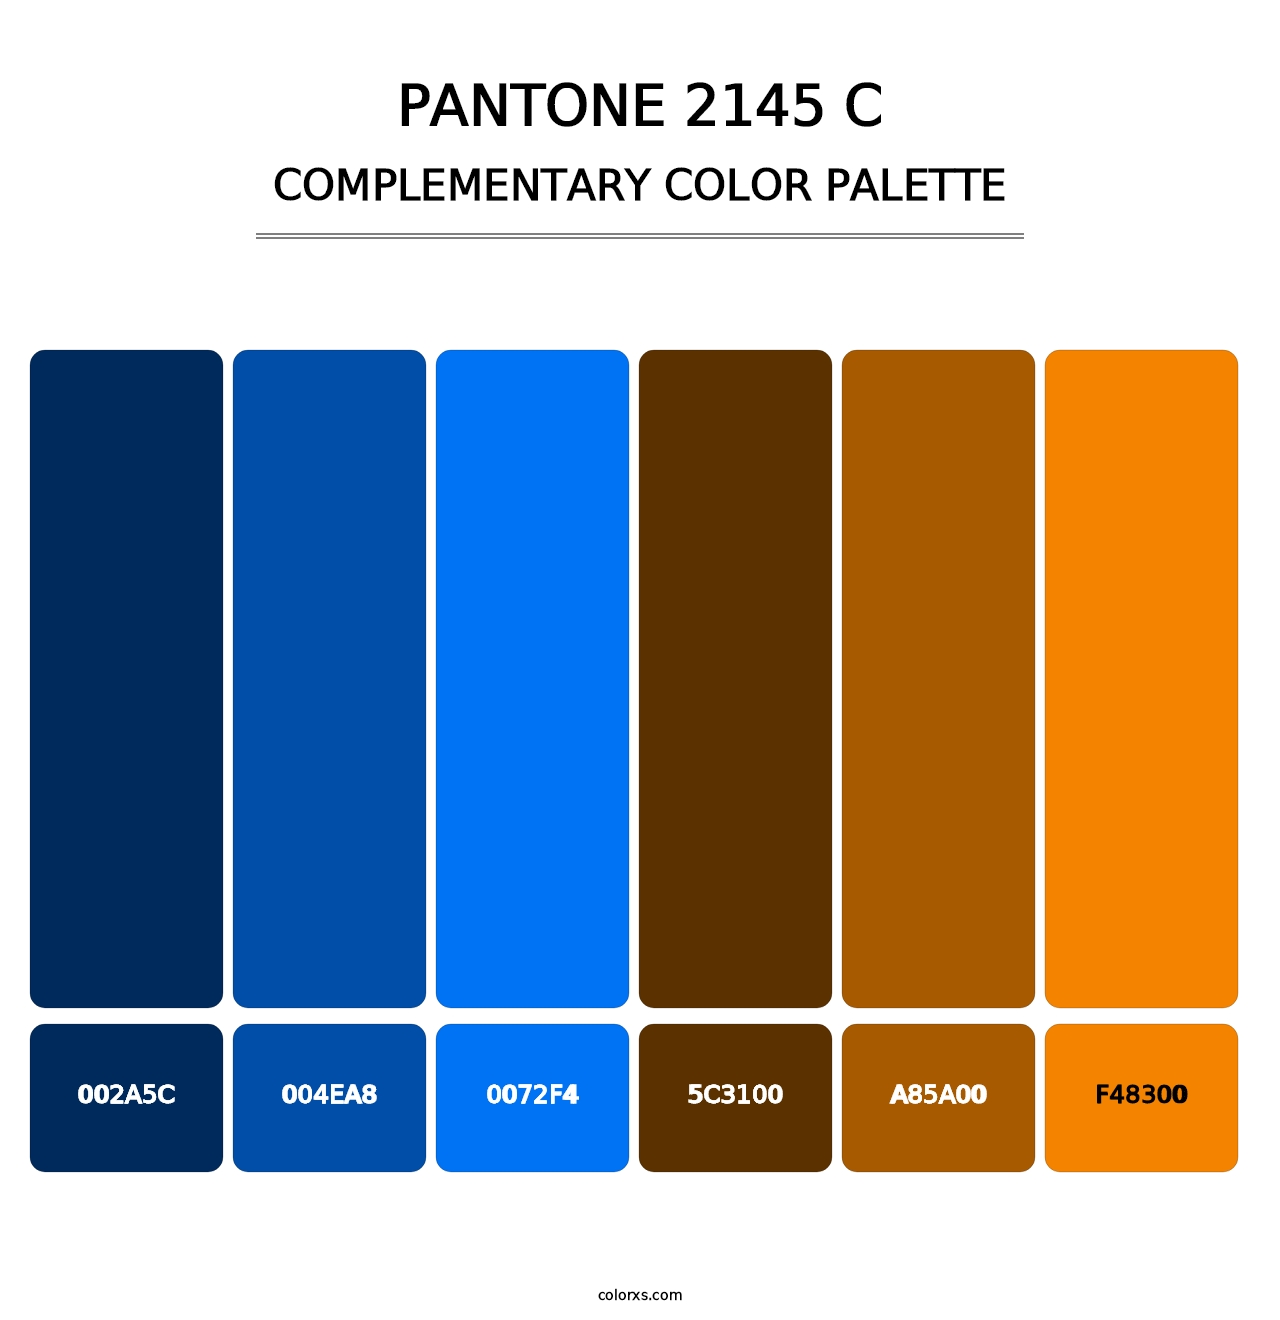 PANTONE 2145 C - Complementary Color Palette